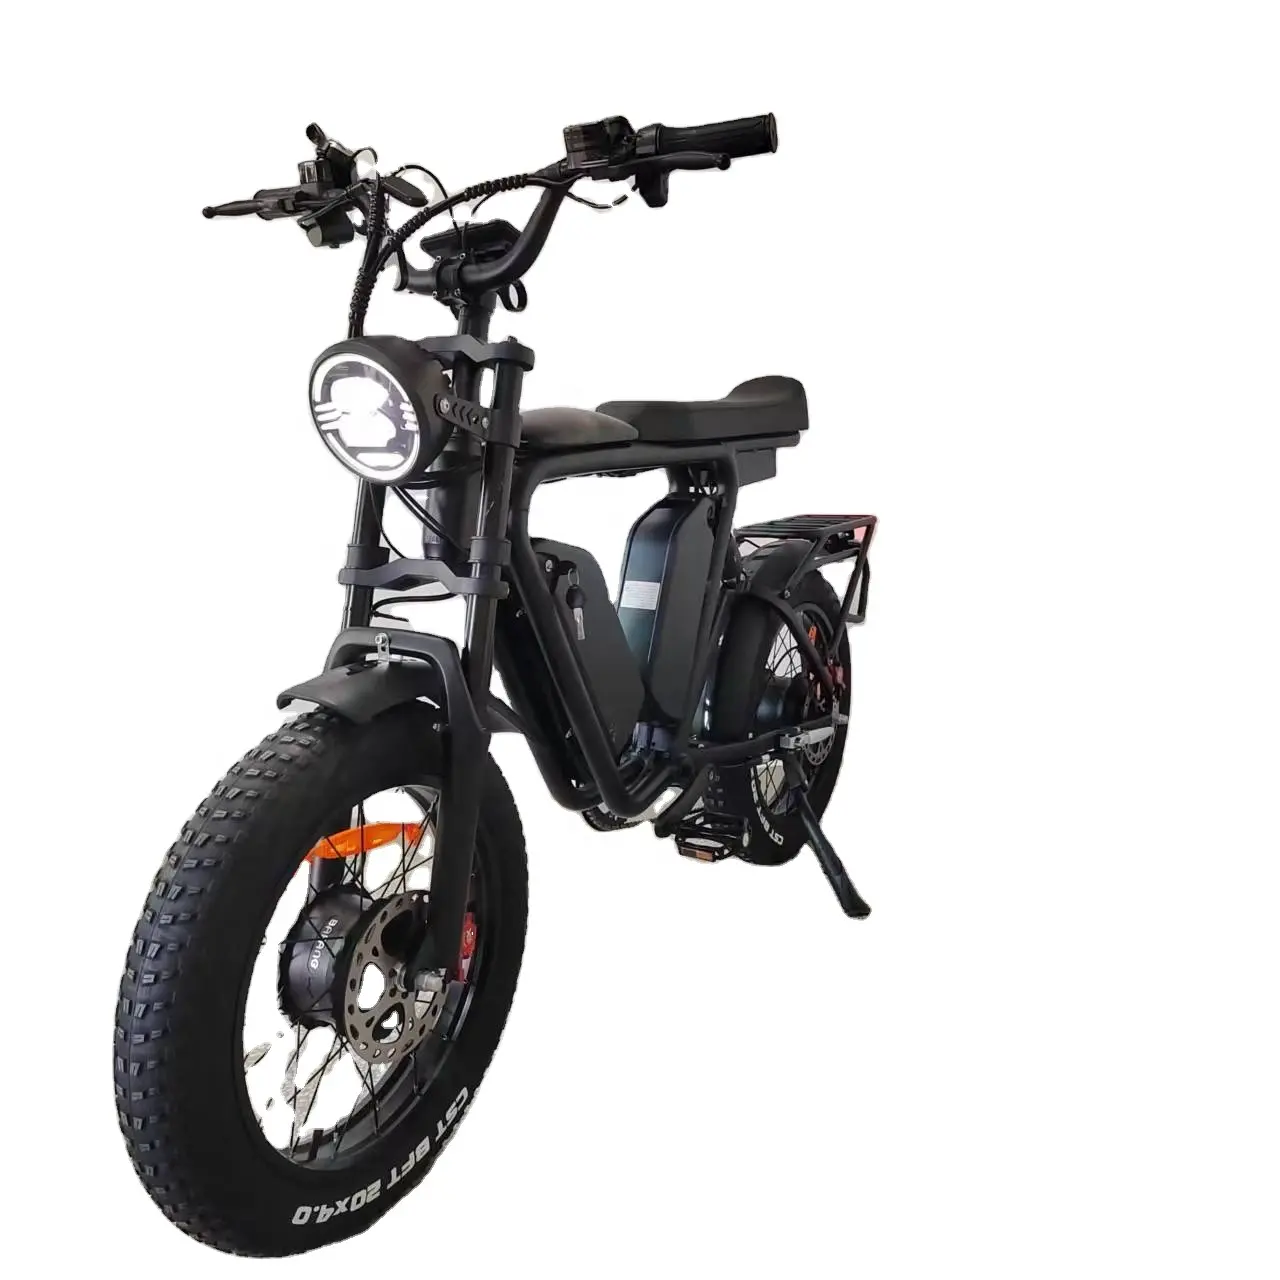 Ebike bafang מנוע כפול 48V1000Wx2 קוריאה כפולה סוללה 44Ah שמן בלם השעיה מלא ארוך מושב שומן מהר צמיג אופניים חשמליים